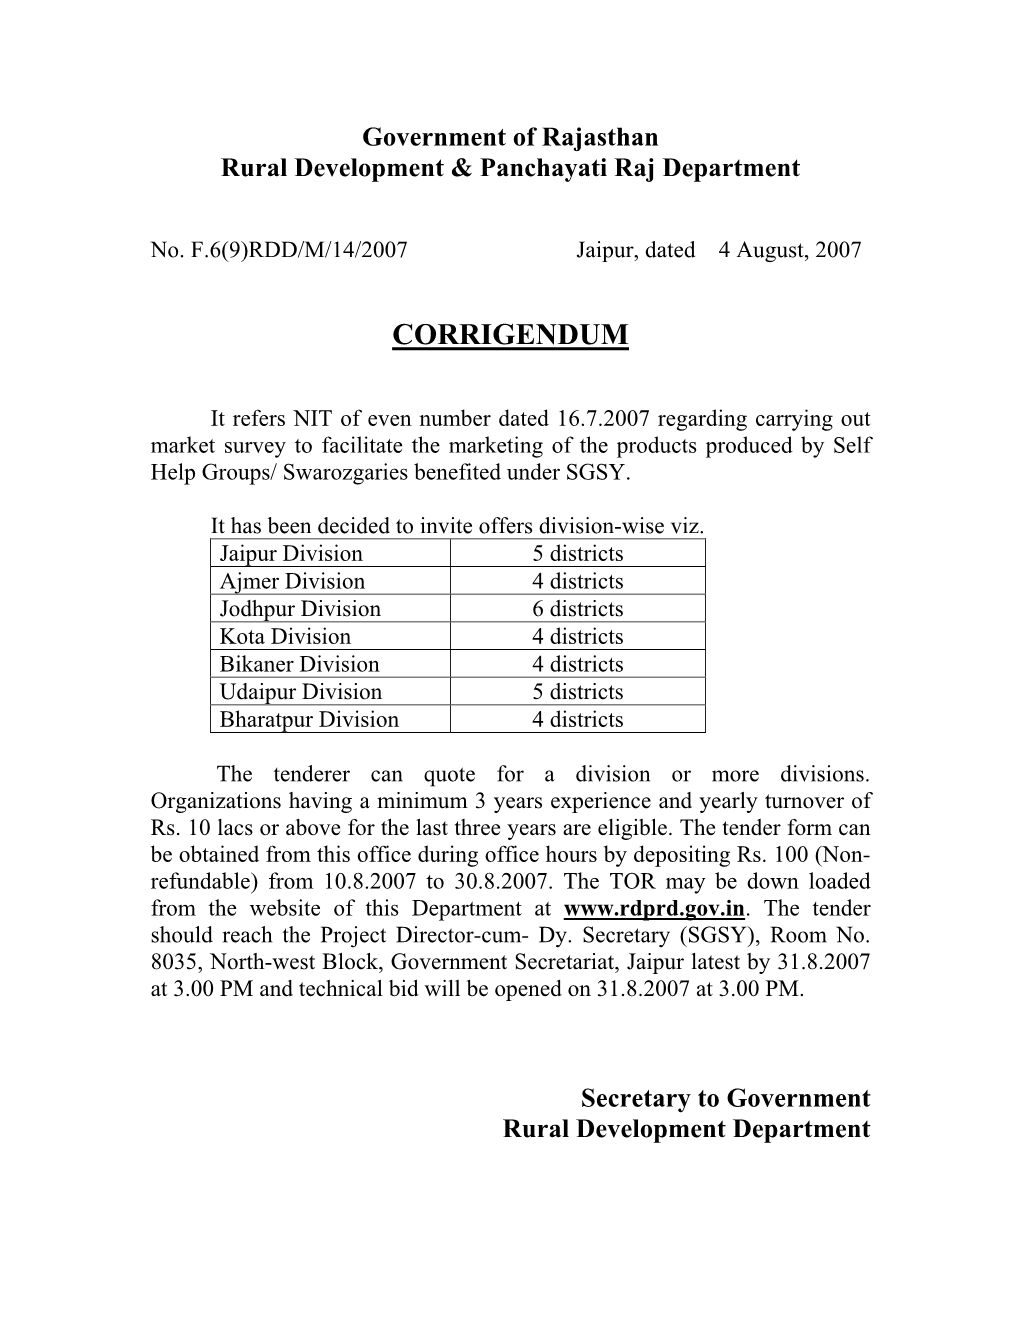 Government of Rajasthan Rural Development & Panchayati Raj Department